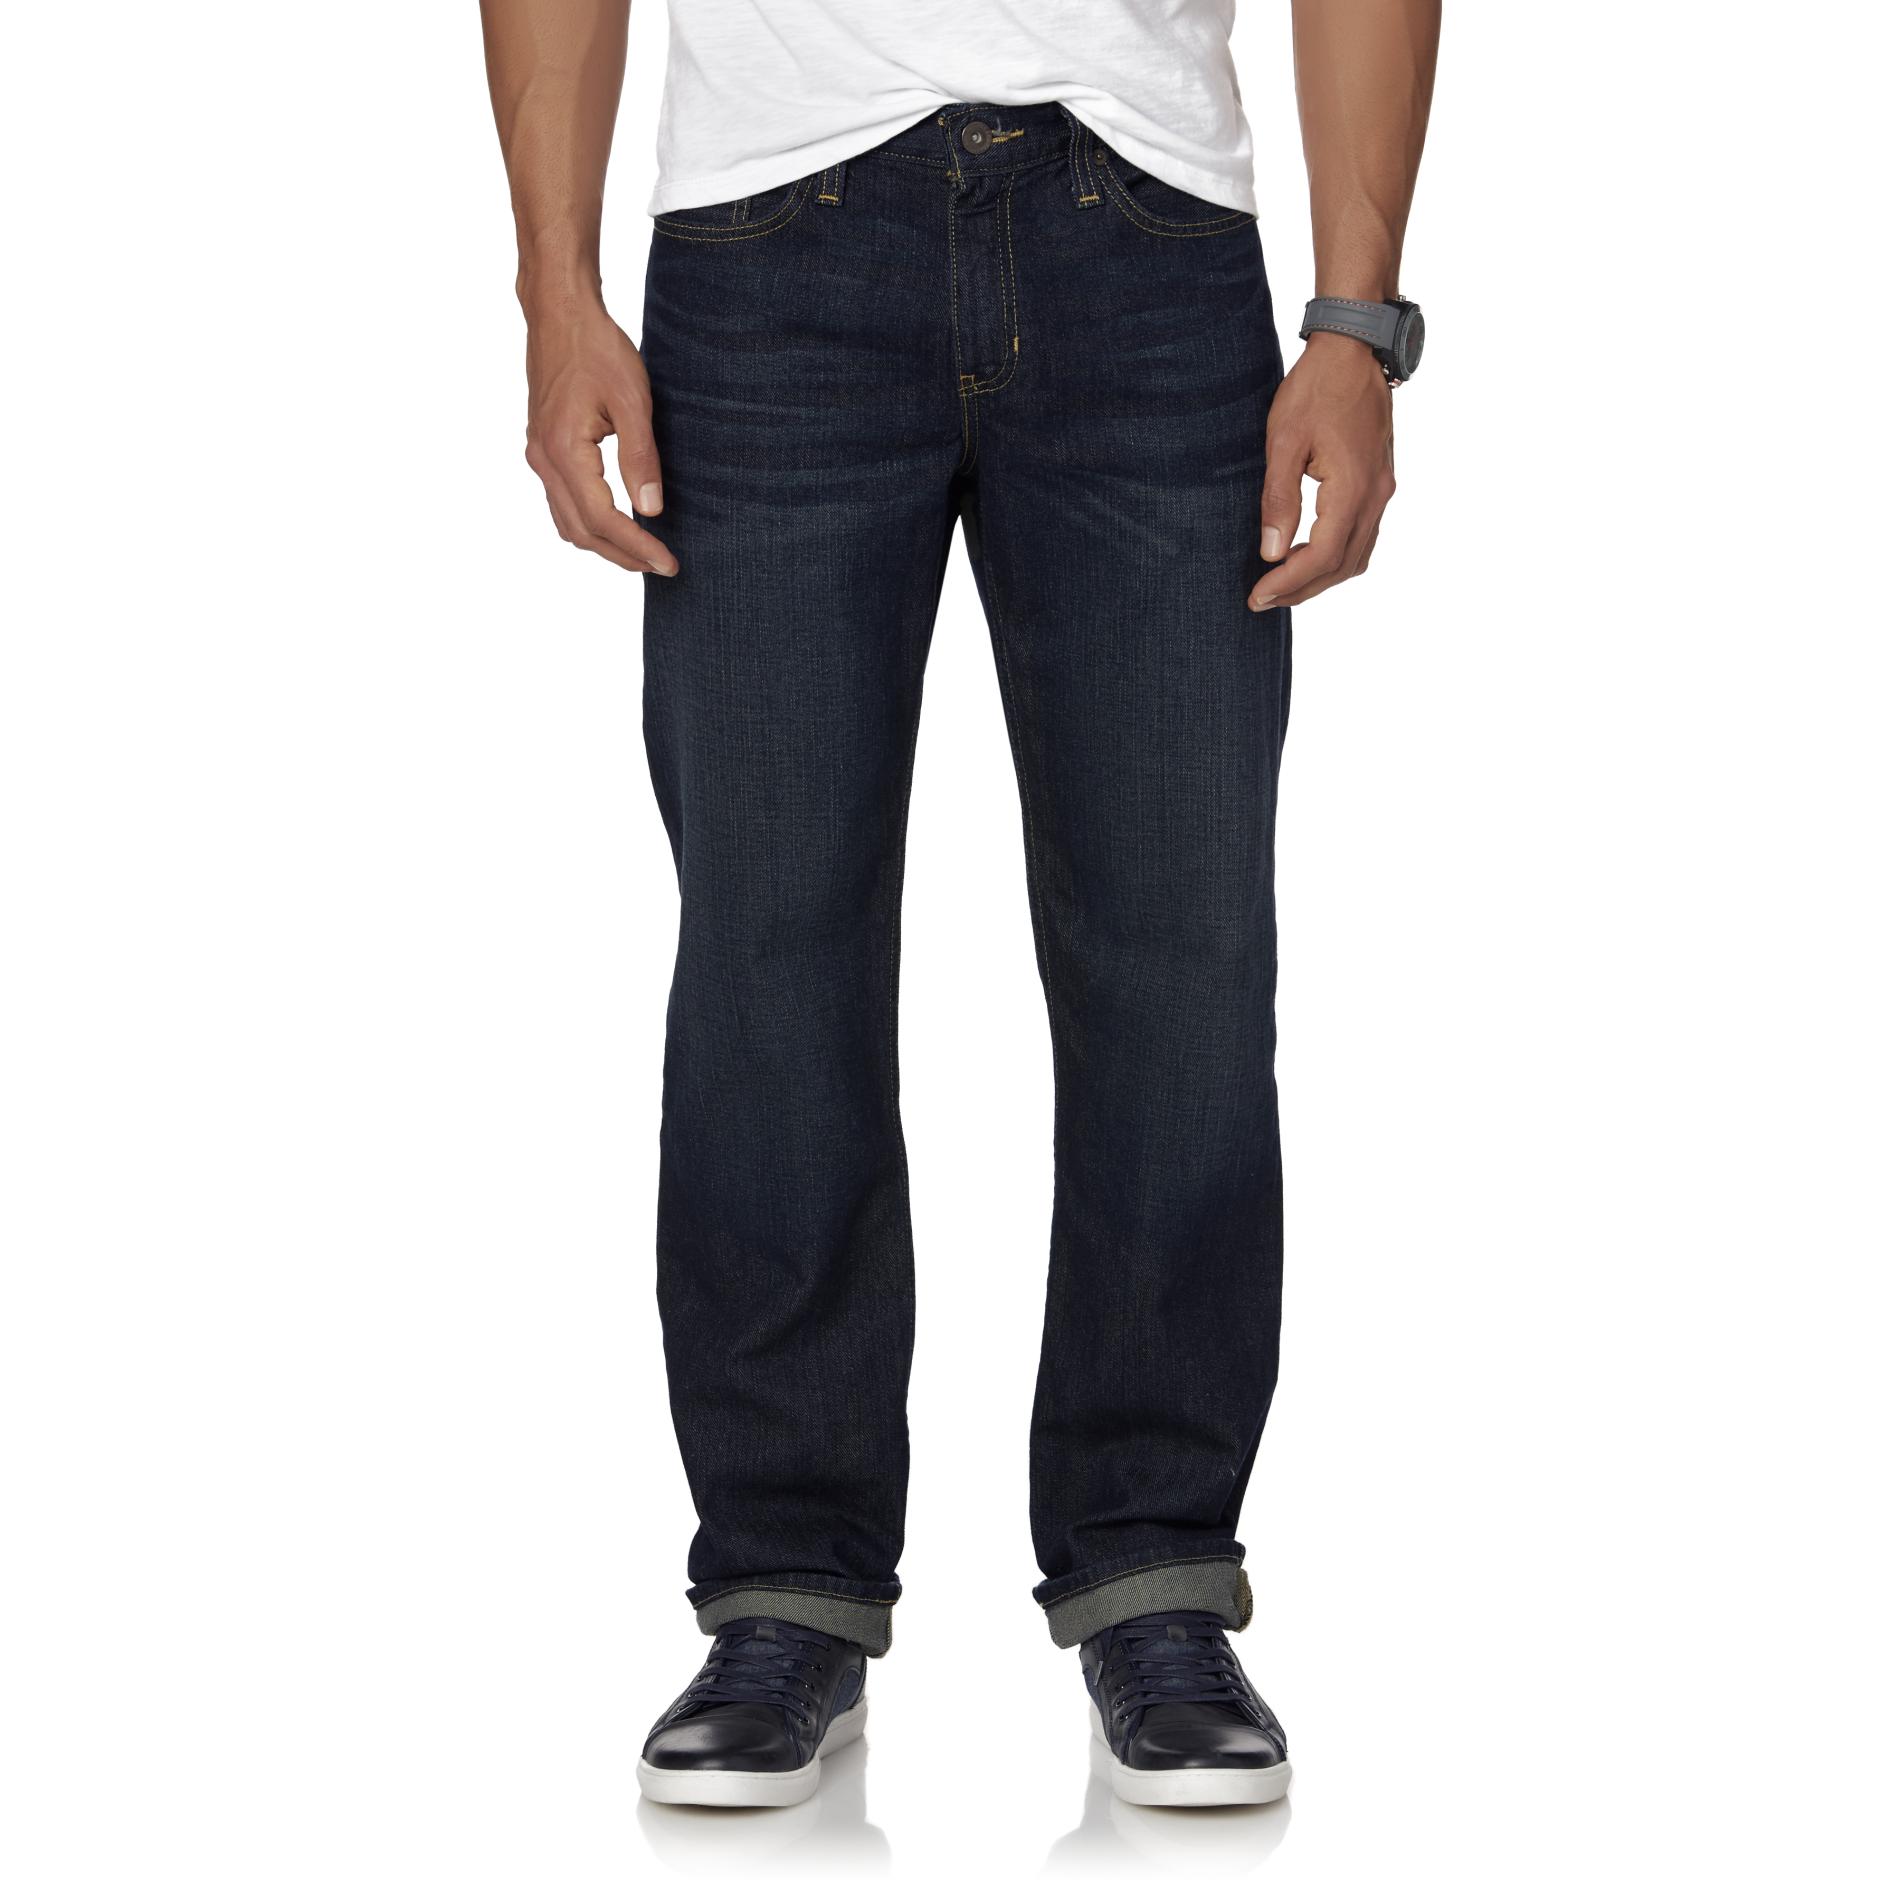 Roebuck & Co. Young Men's Slim Fit Jeans | Shop Your Way: Online ...